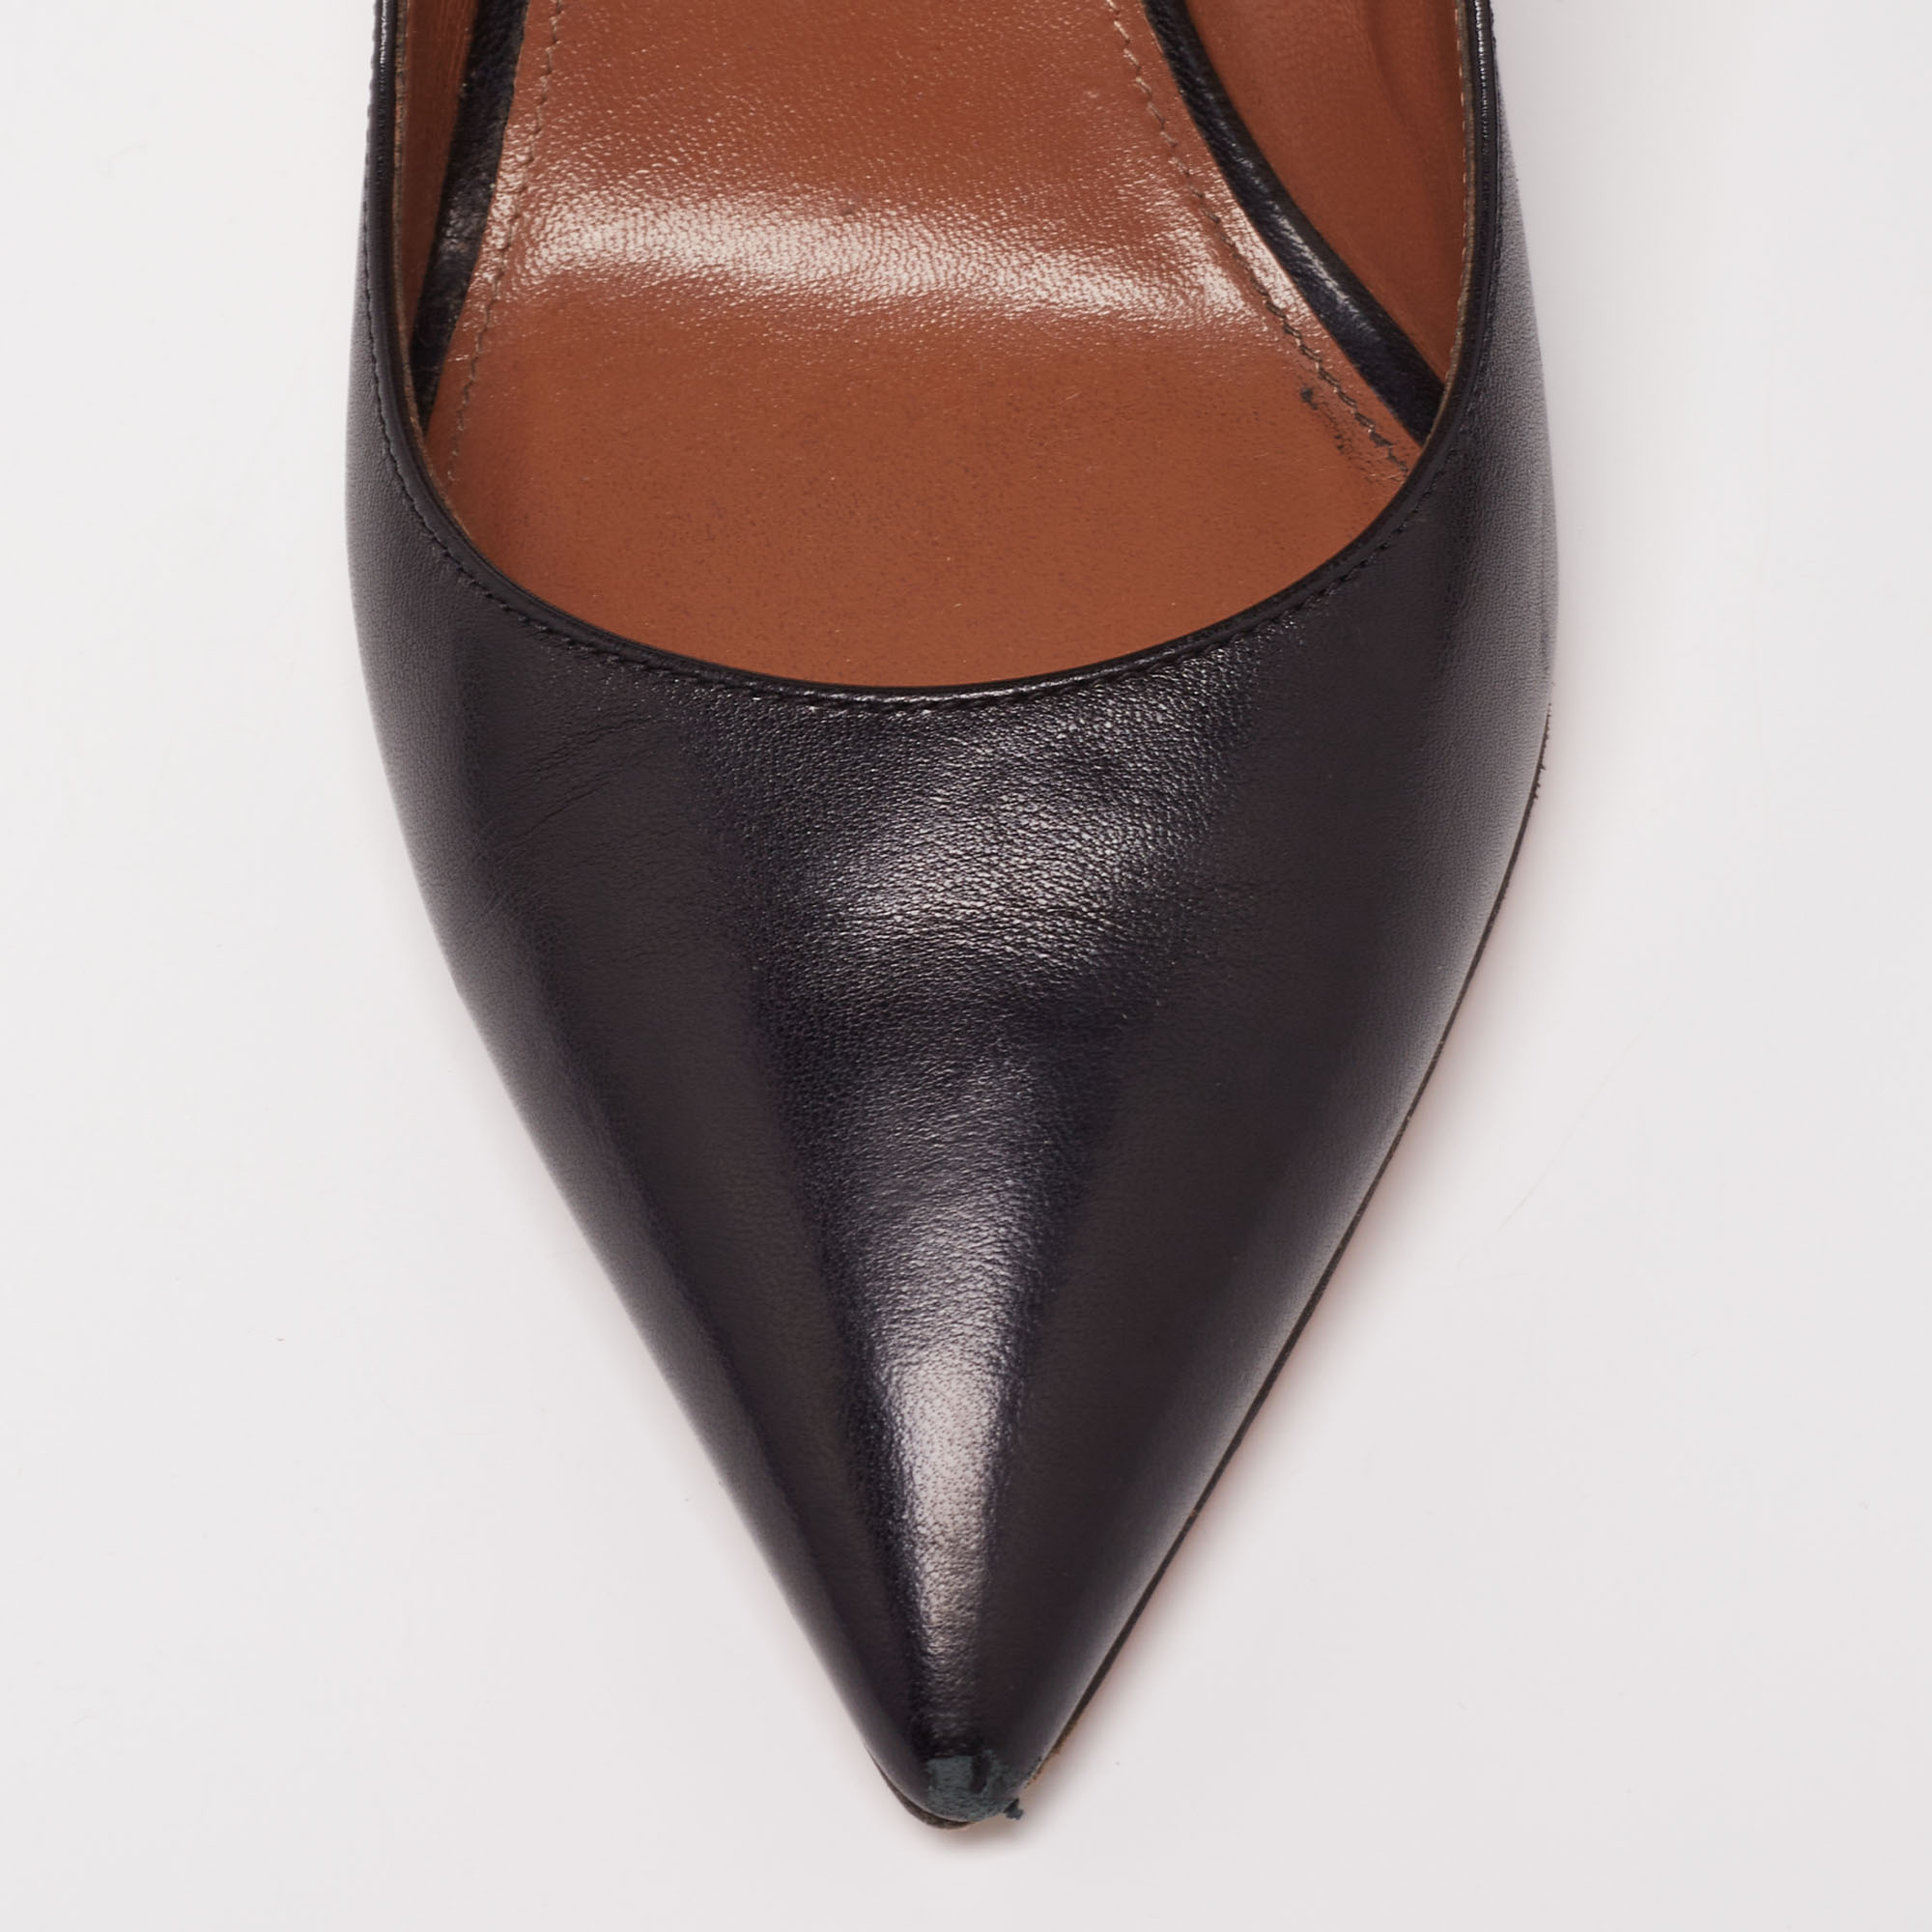 Aquazzura Black Leather Dolce Vita Ankle-Strap Pumps Size 40